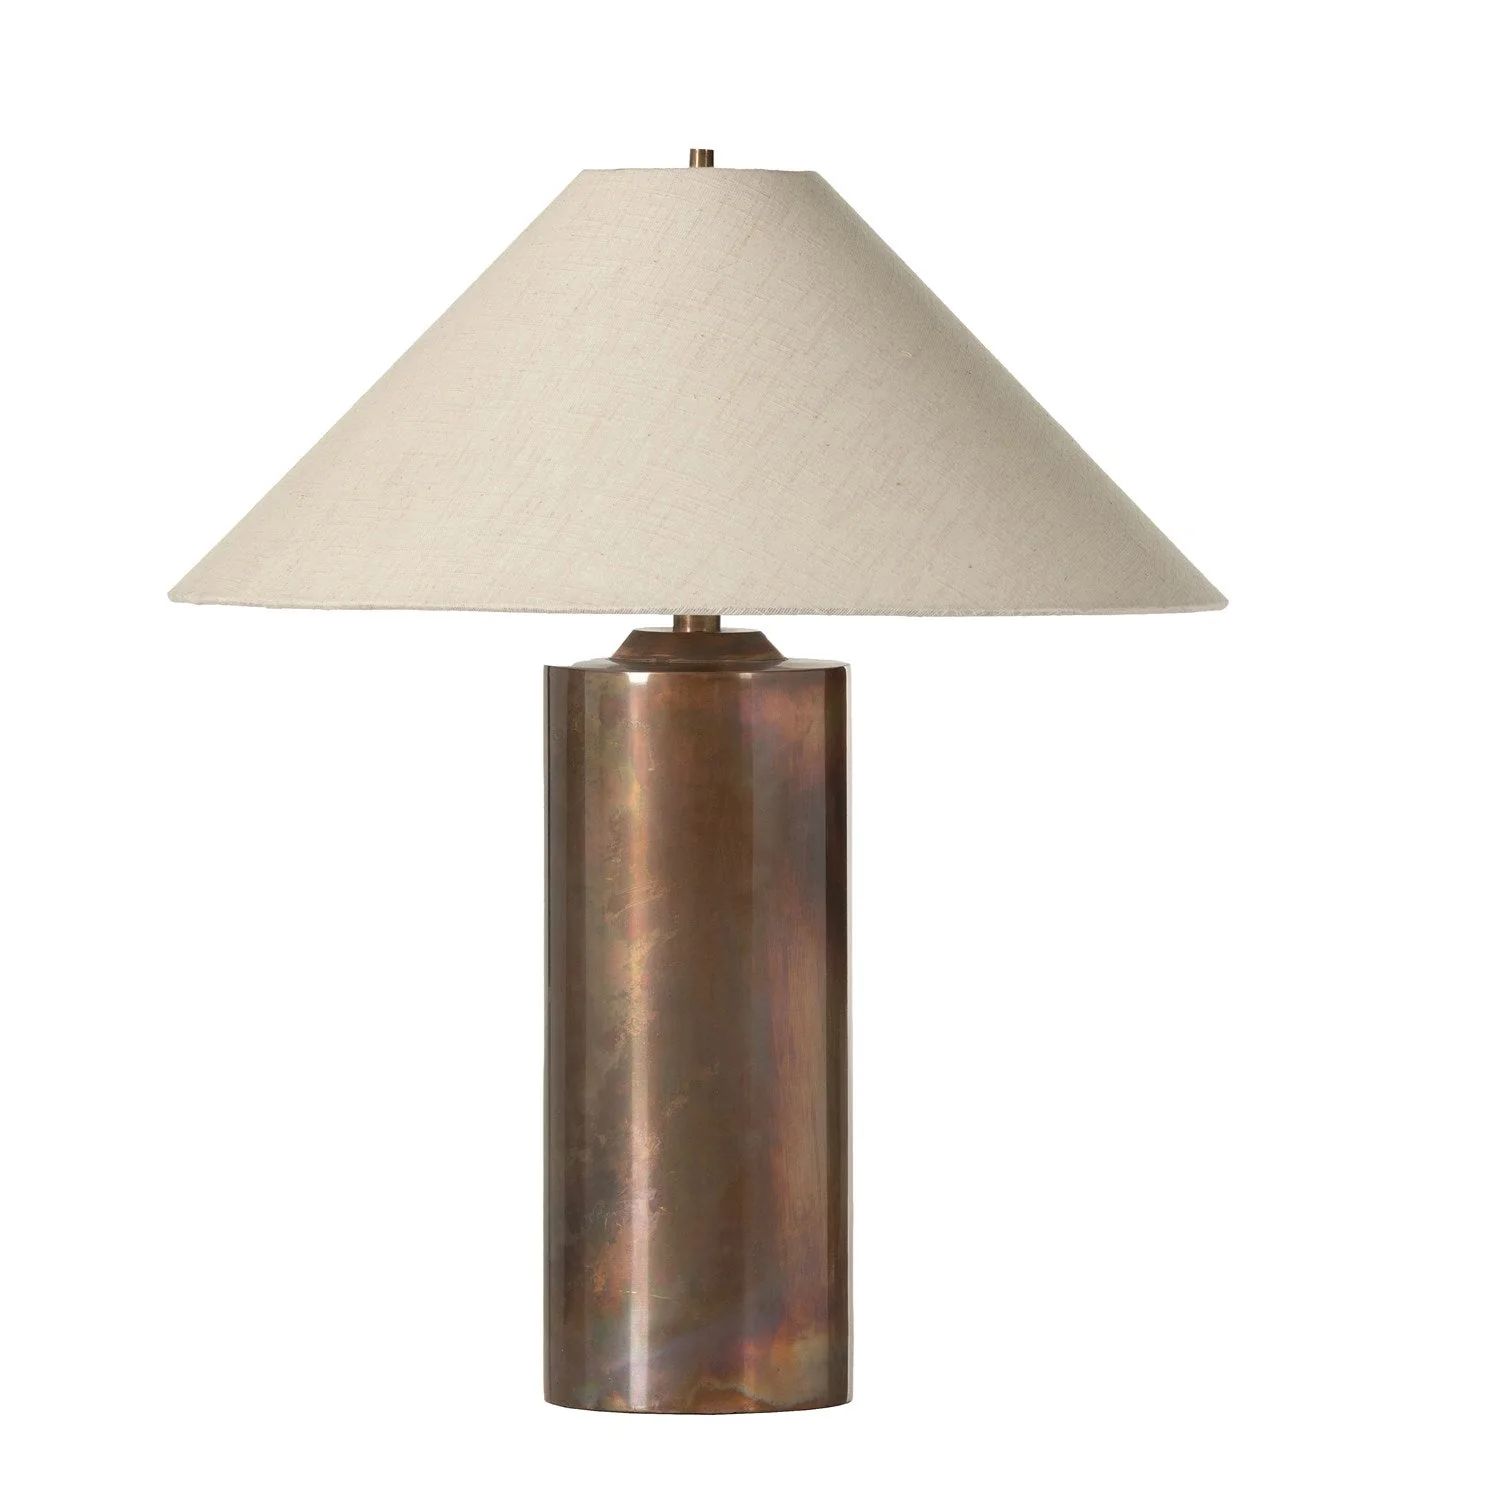 Seaton Table Lamp | Burke Decor